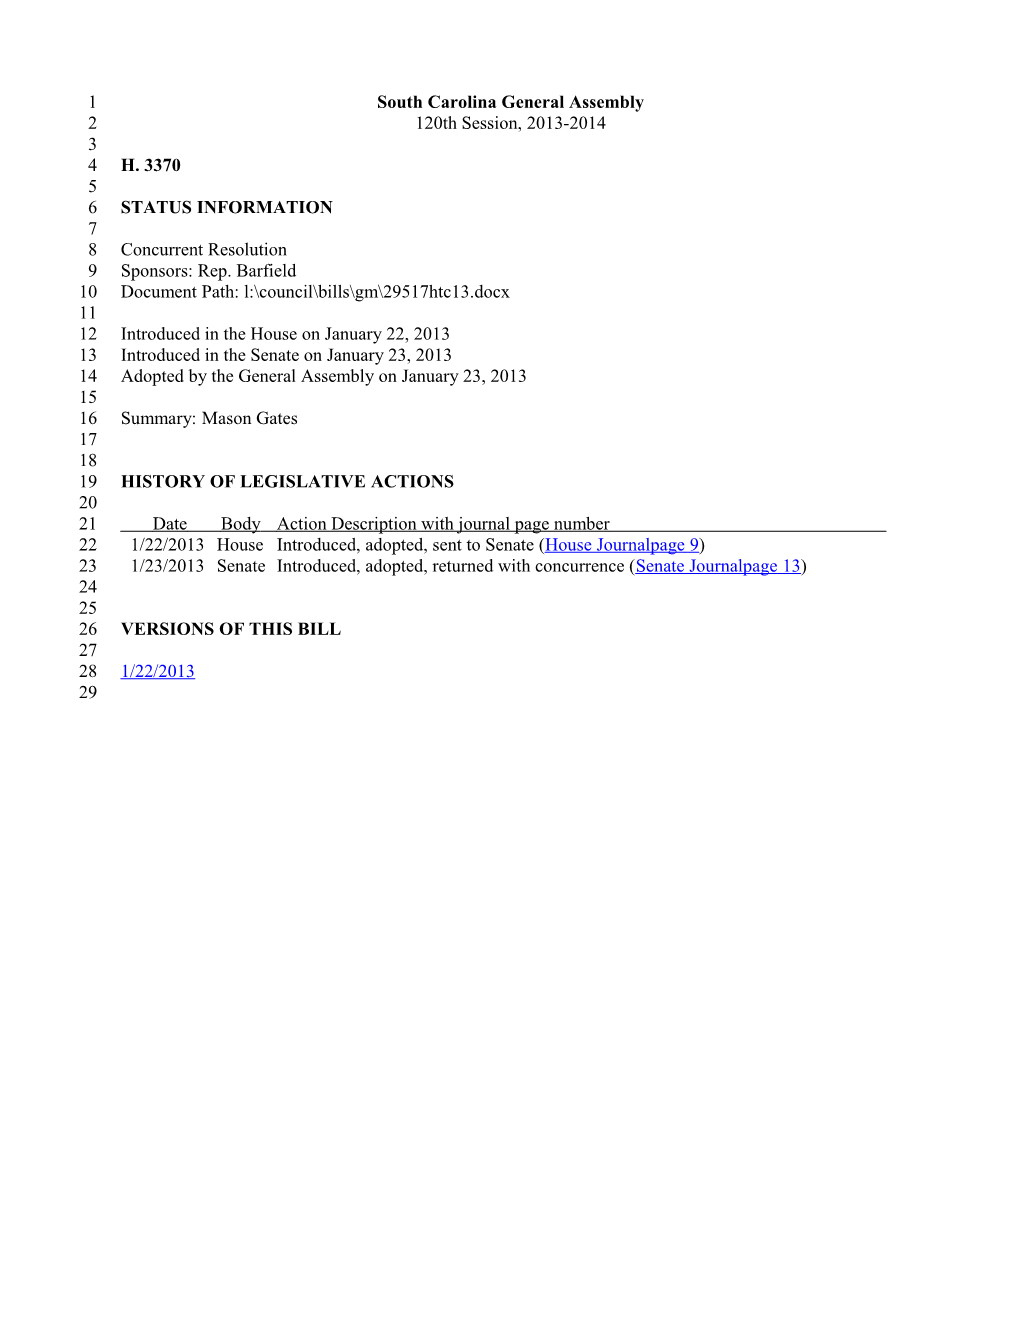 2013-2014 Bill 3370: Mason Gates - South Carolina Legislature Online